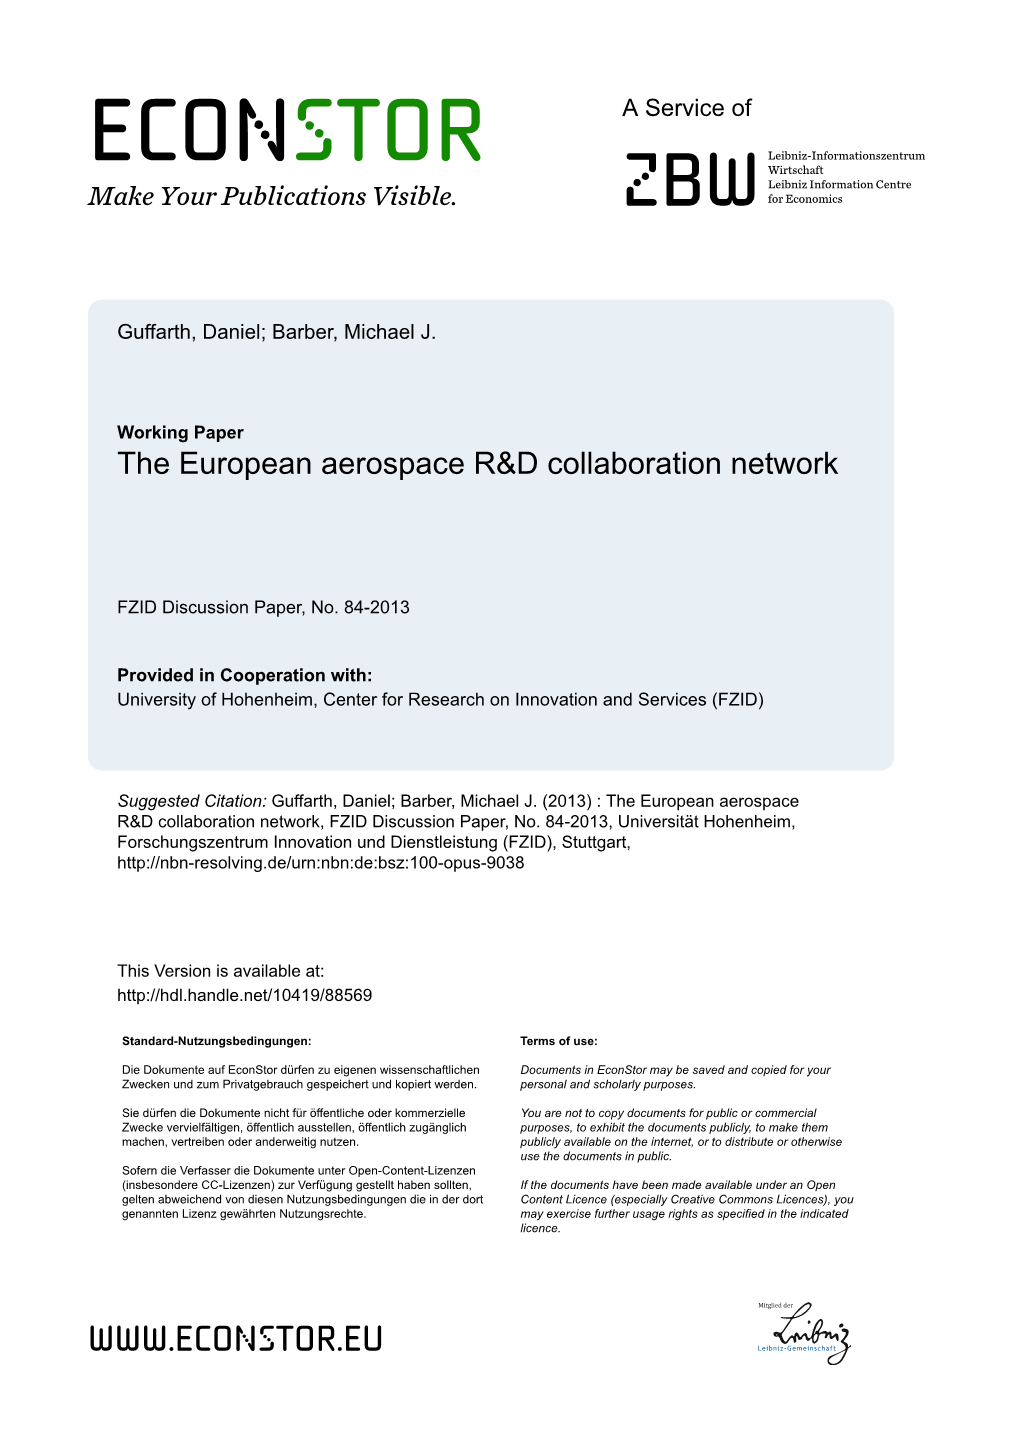 The European Aerospace R&D Collaboration Network